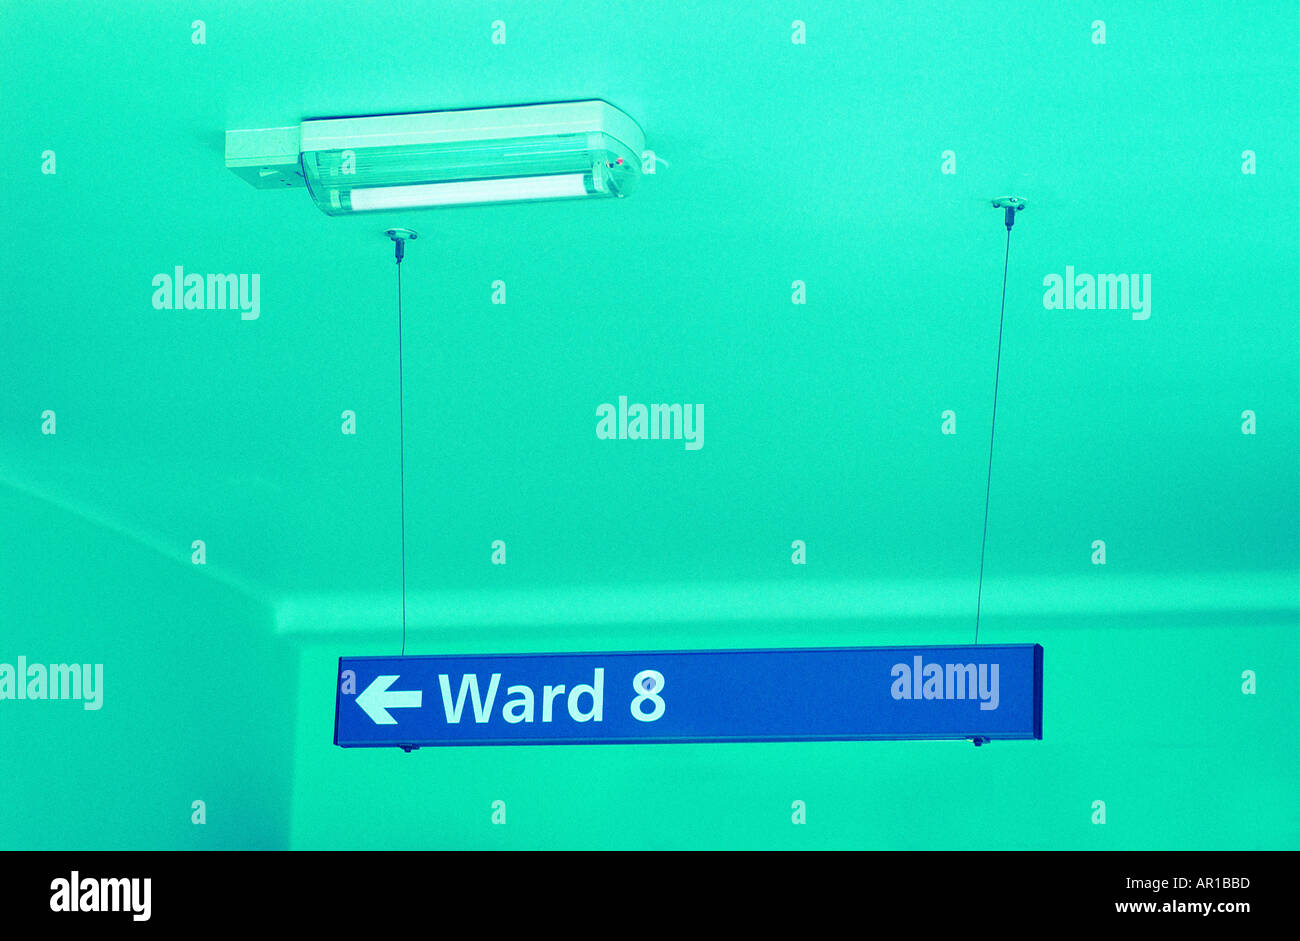 Ward 8 sign in hospital Stock Photo